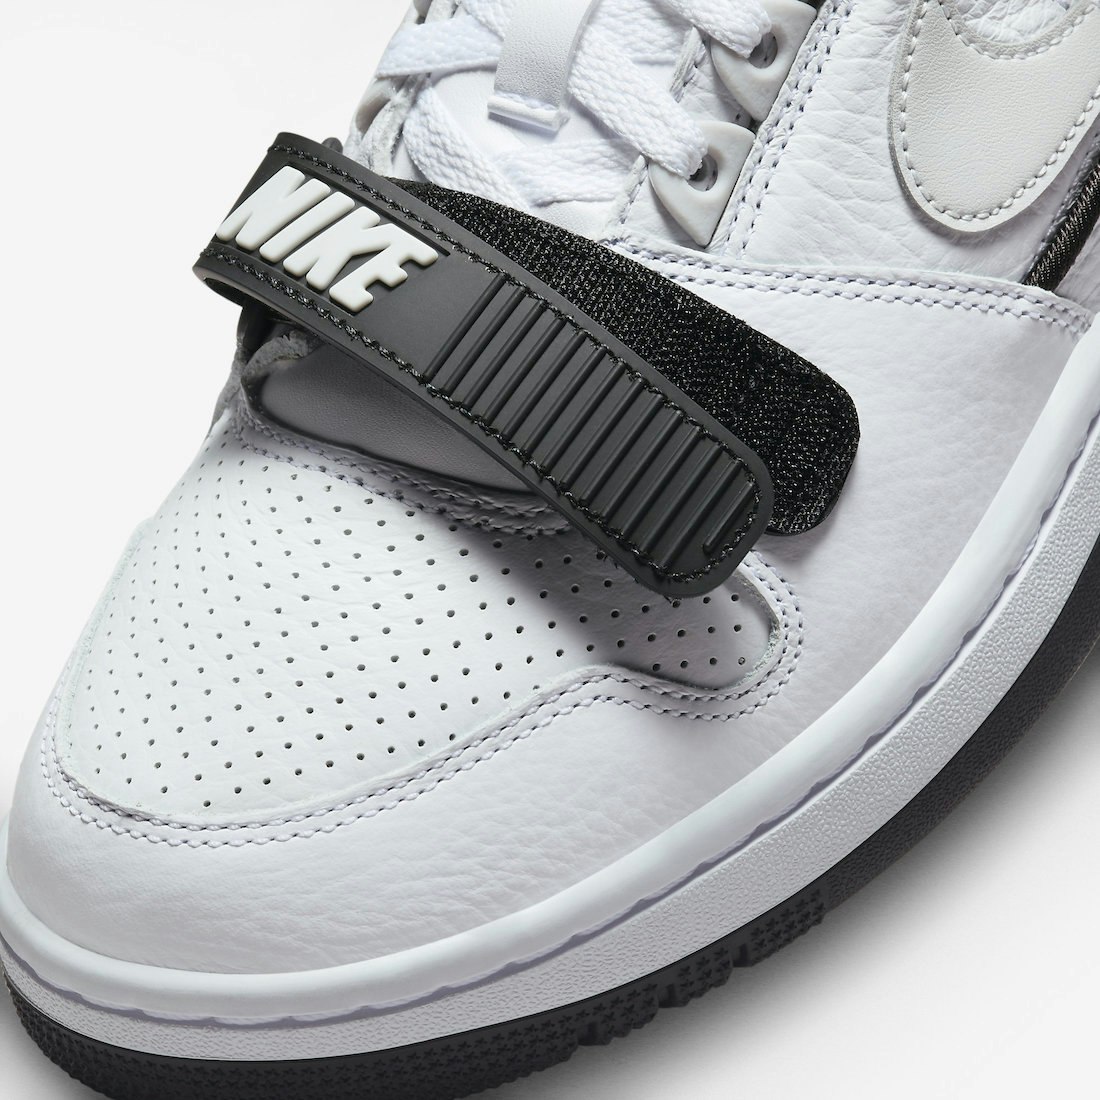 Nike Air Alpha Force 88 "Tech Grey"